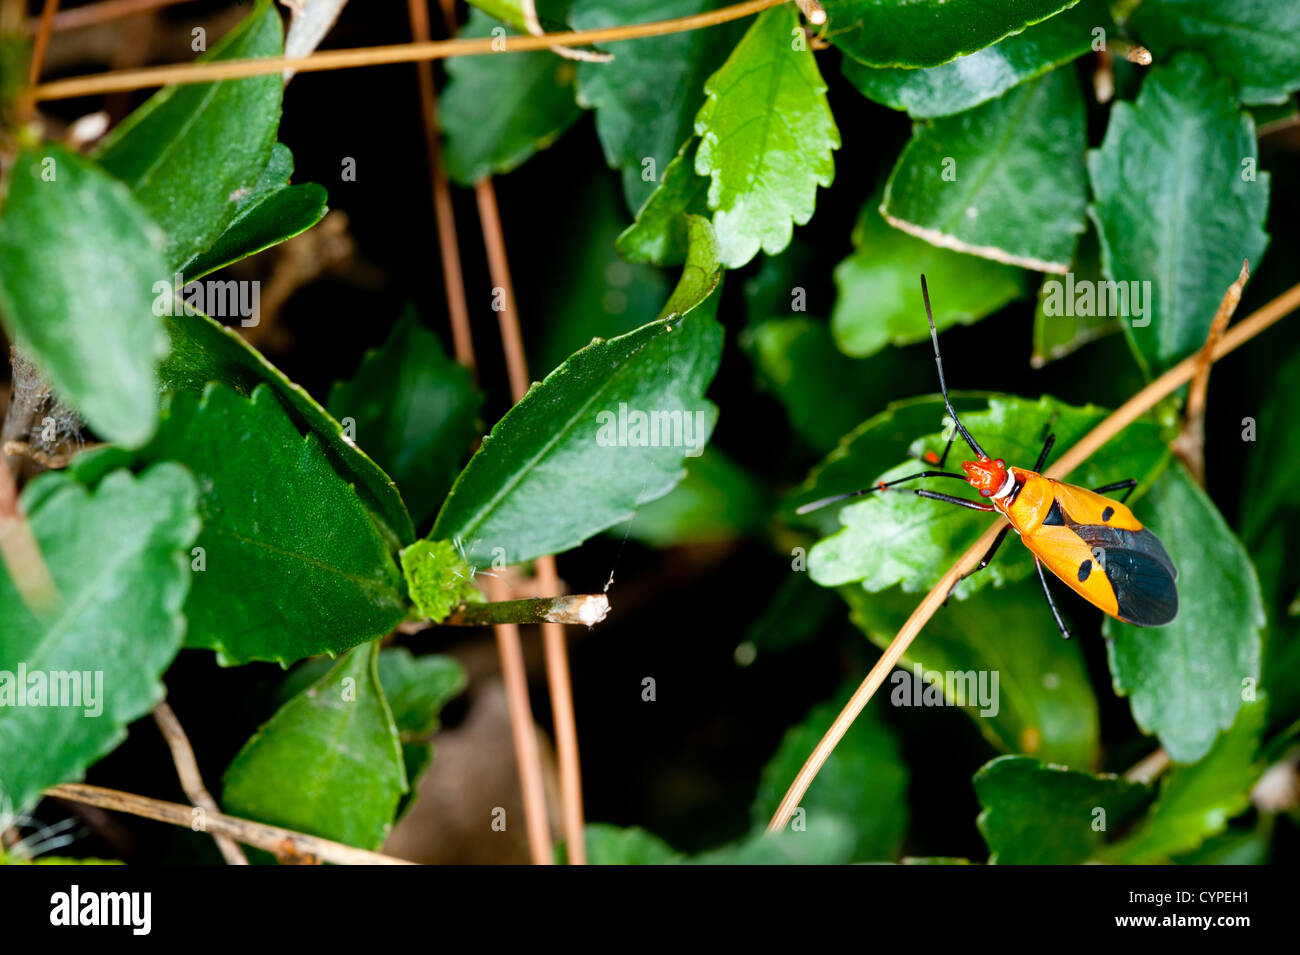 Orange assassin bug on a green leaf Stock Photo